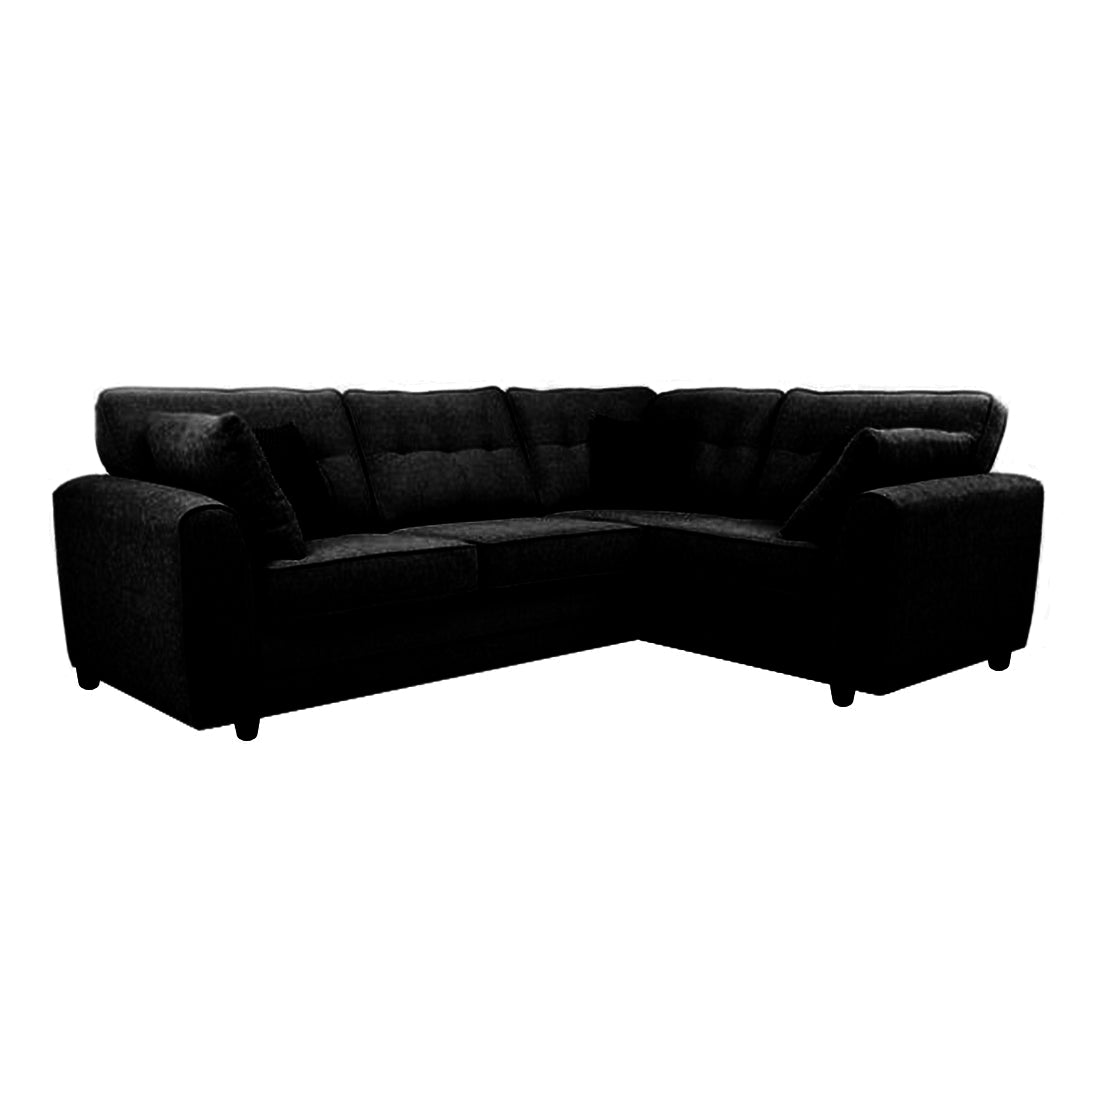 Hatfield 5 Seater Fabric Sofa for Living Room - Torque India